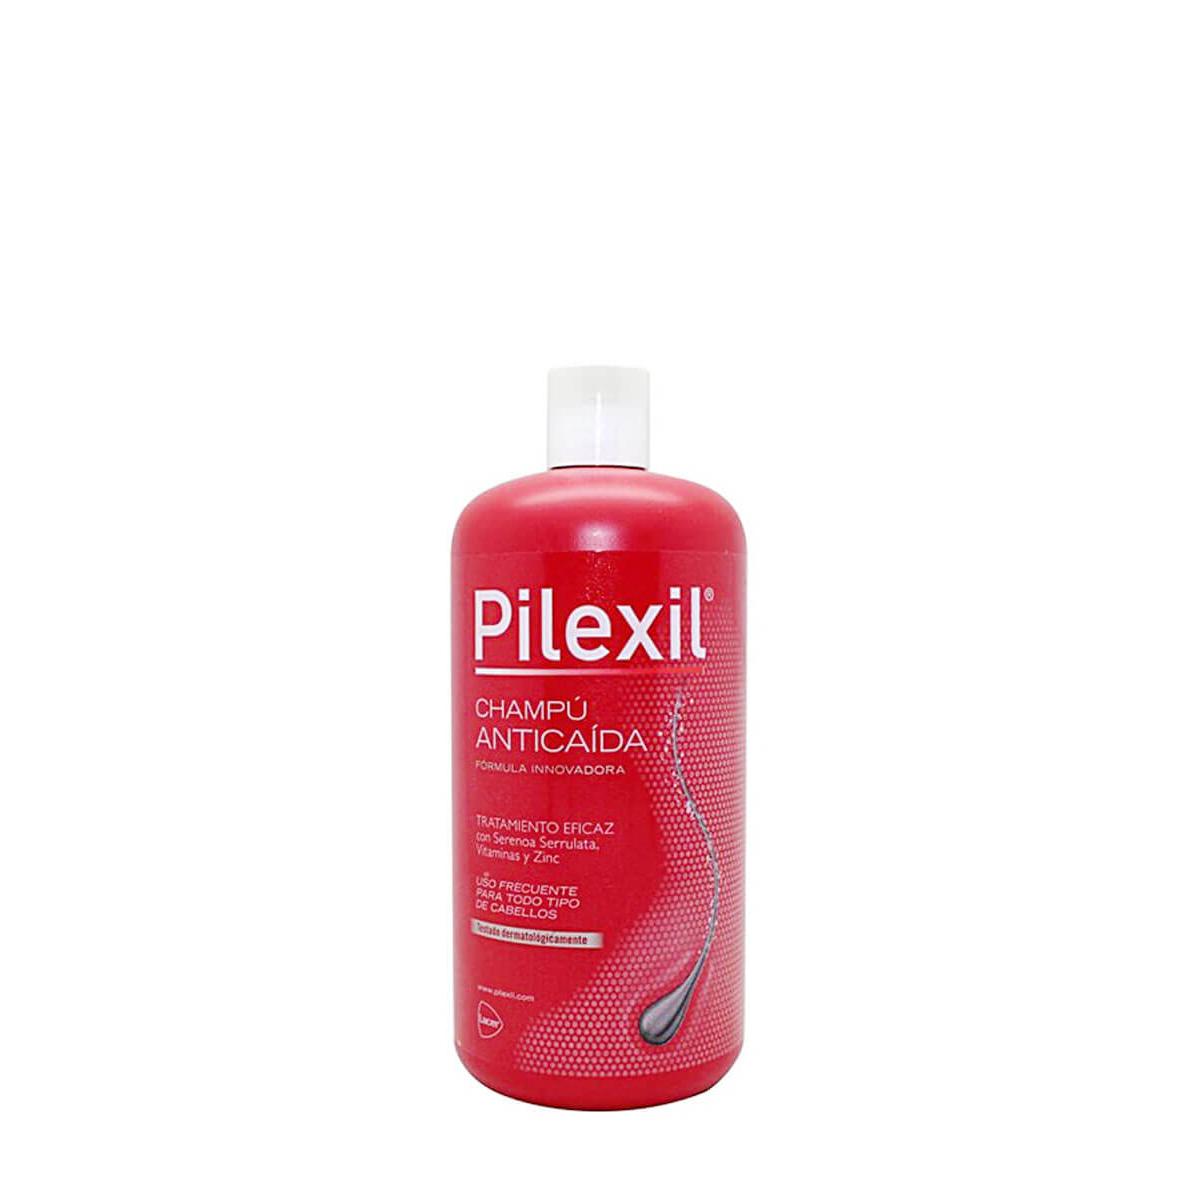 Pilexil - Pilexil champú anticaída 900 ml